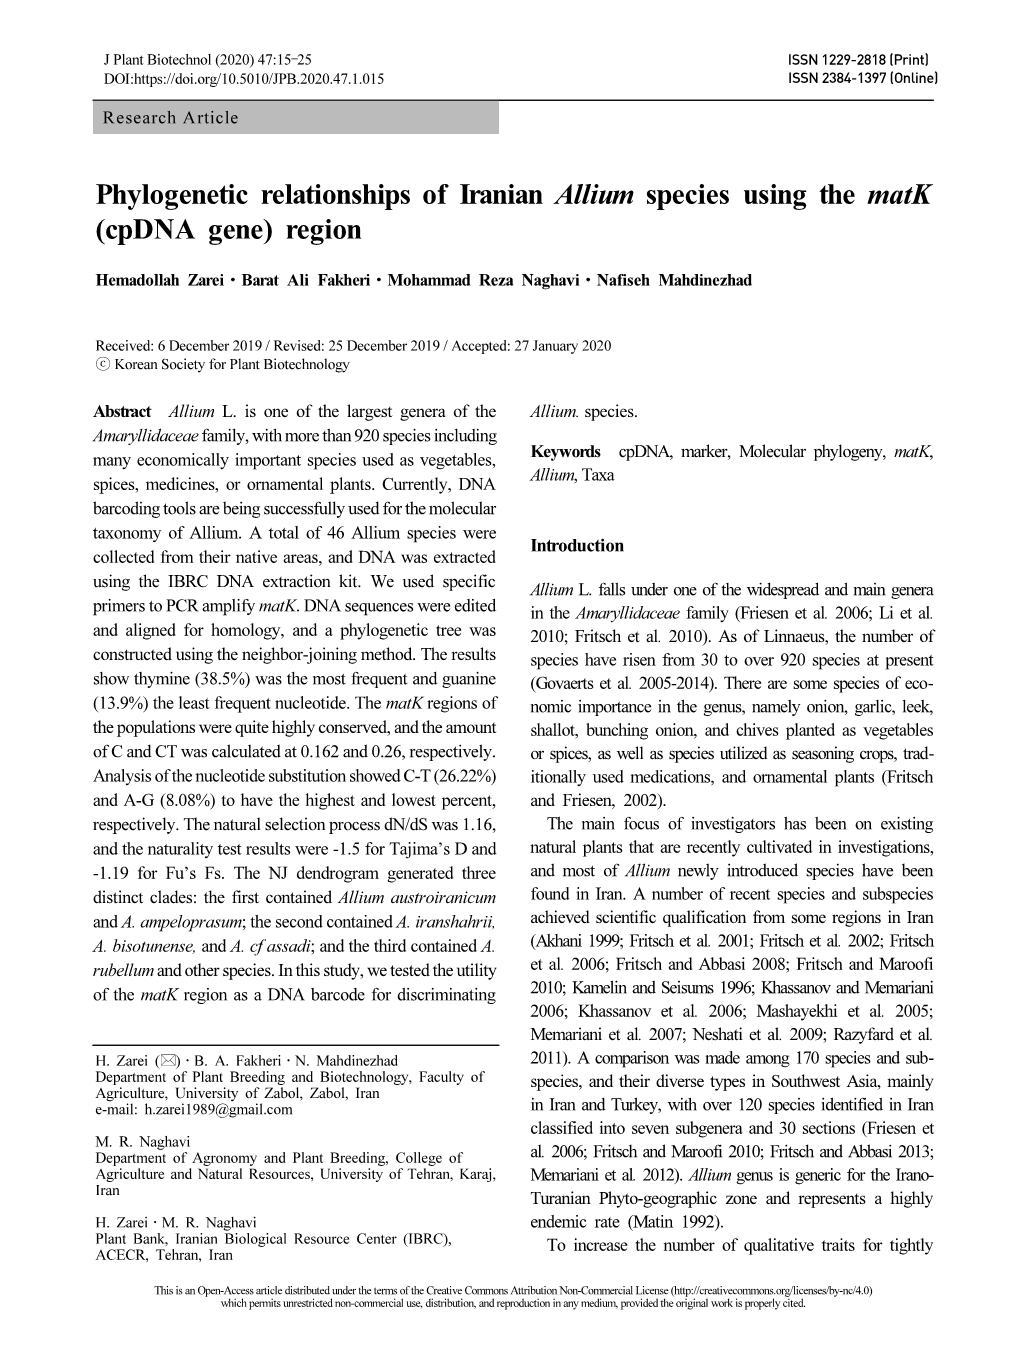 Phylogenetic Relationships of Iranian Allium Species Using the Matk (Cpdna Gene) Region